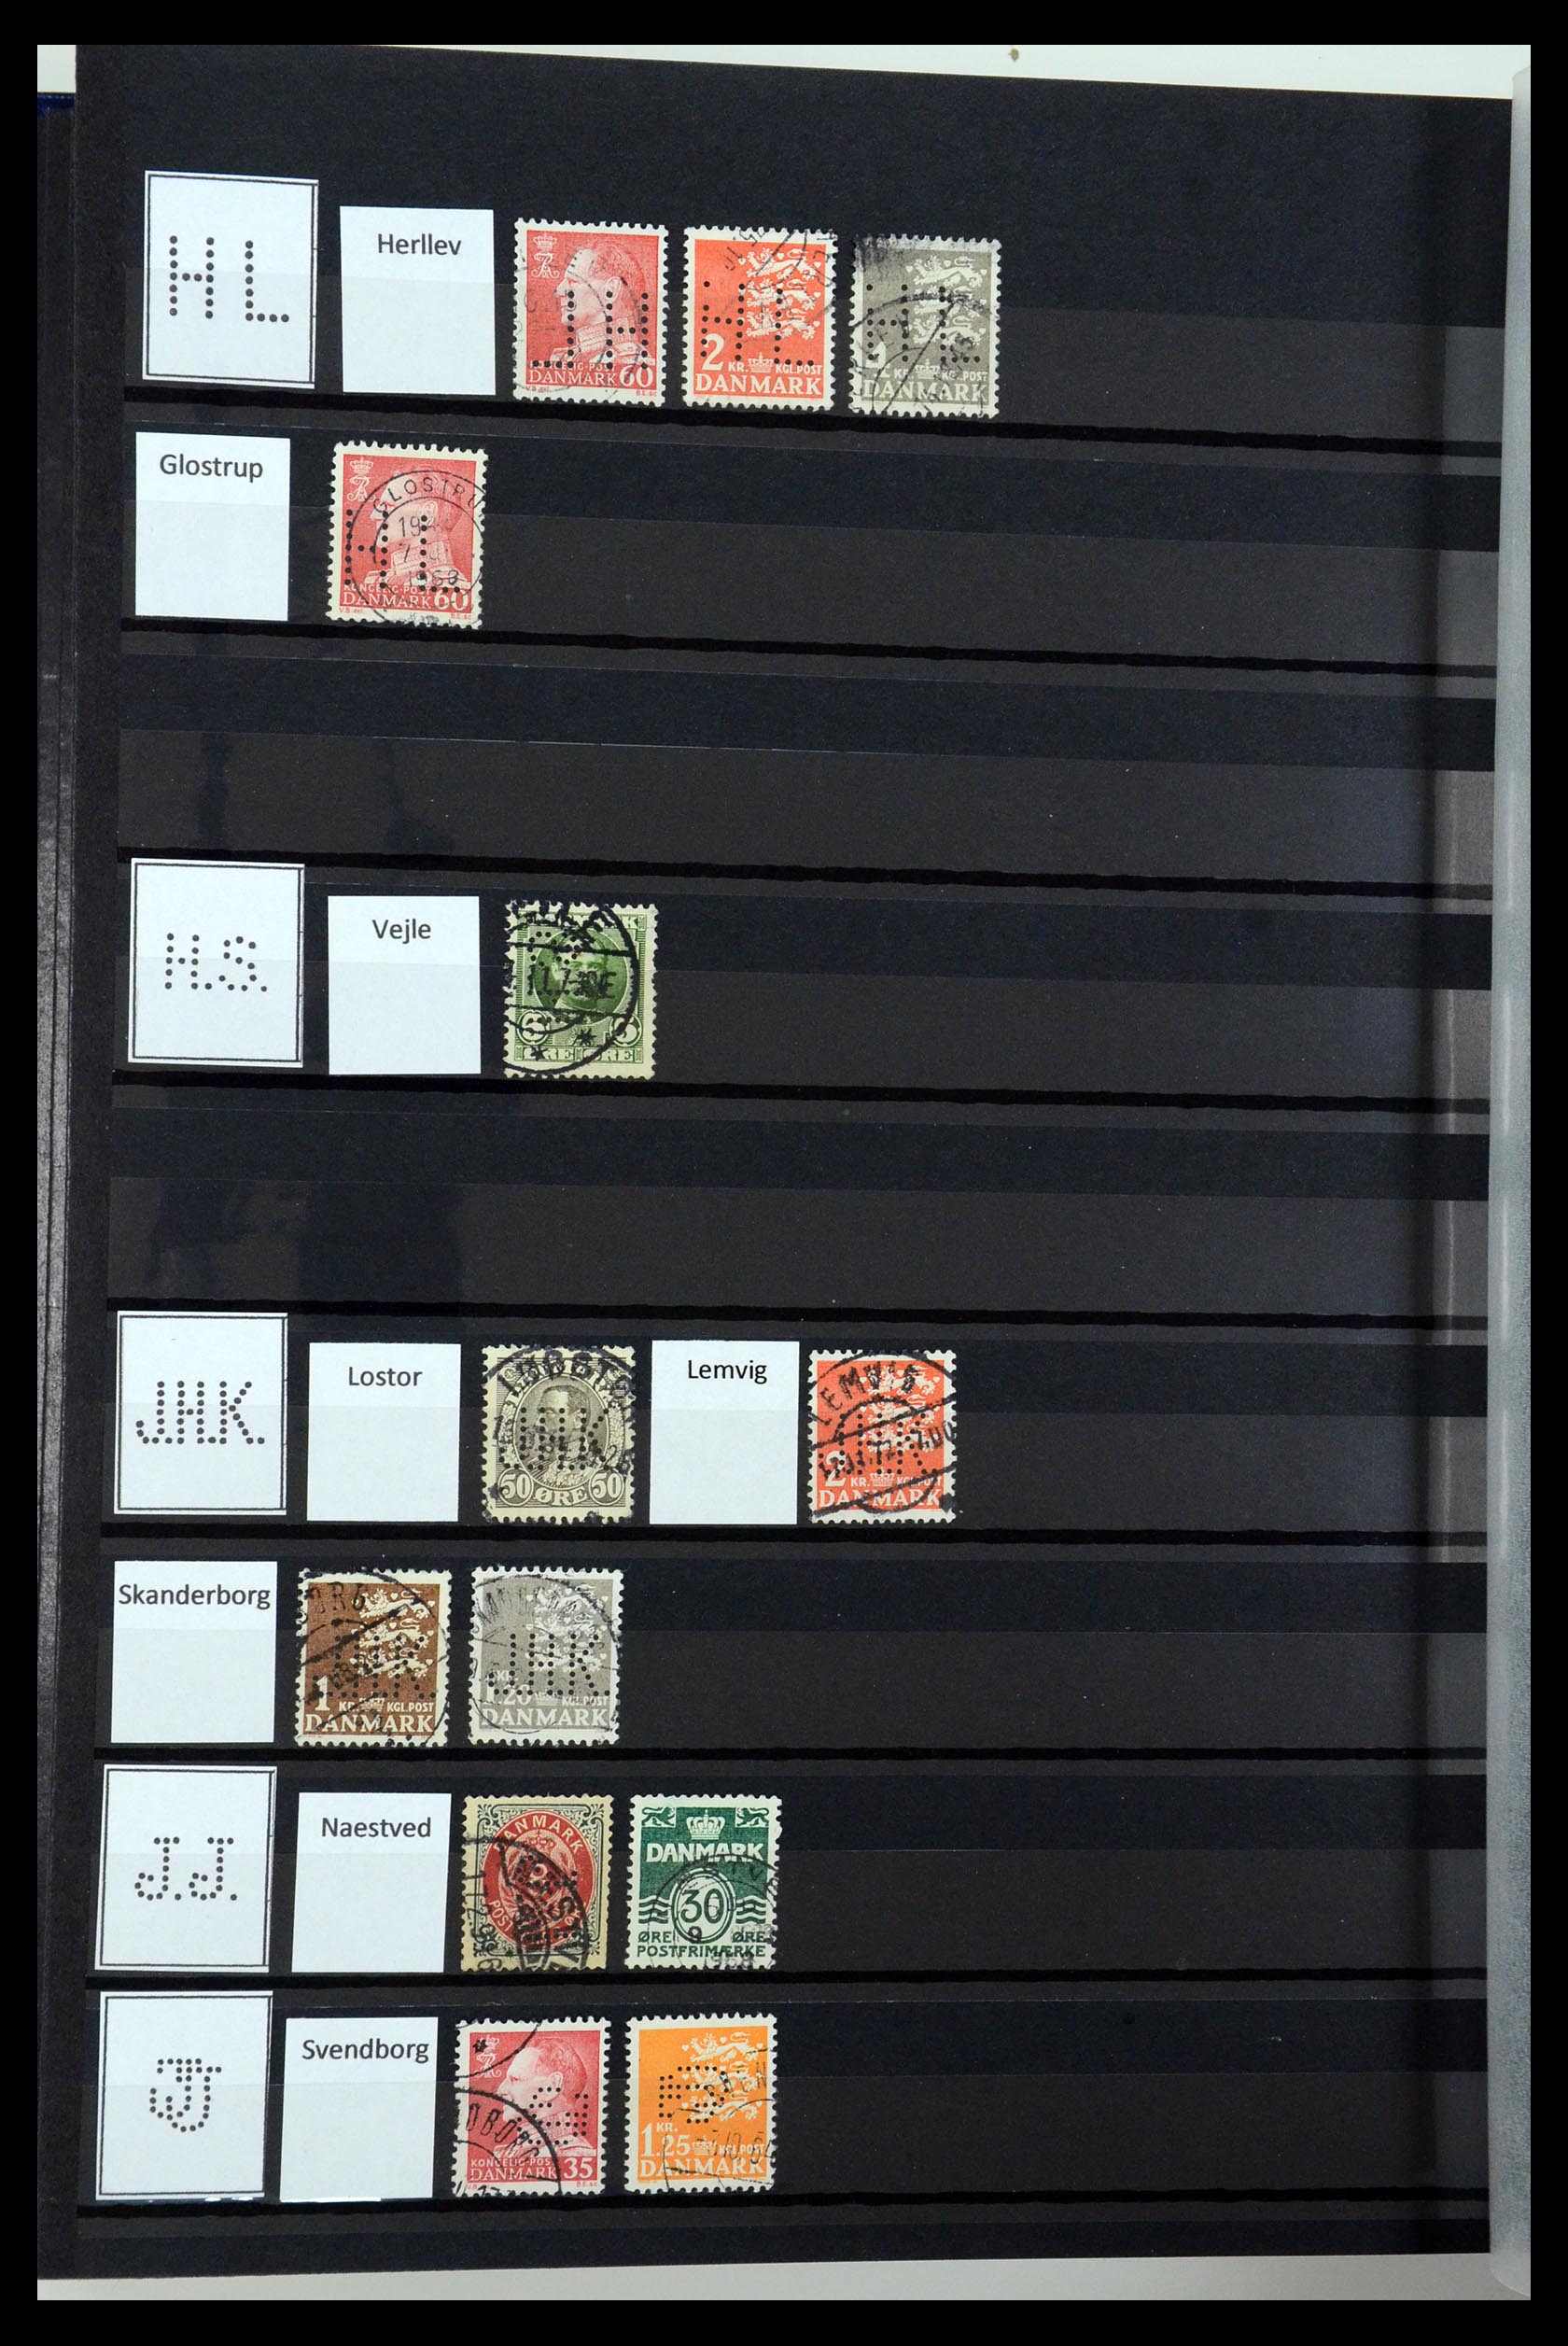 36396 081 - Stamp collection 36396 Denmark perfins.